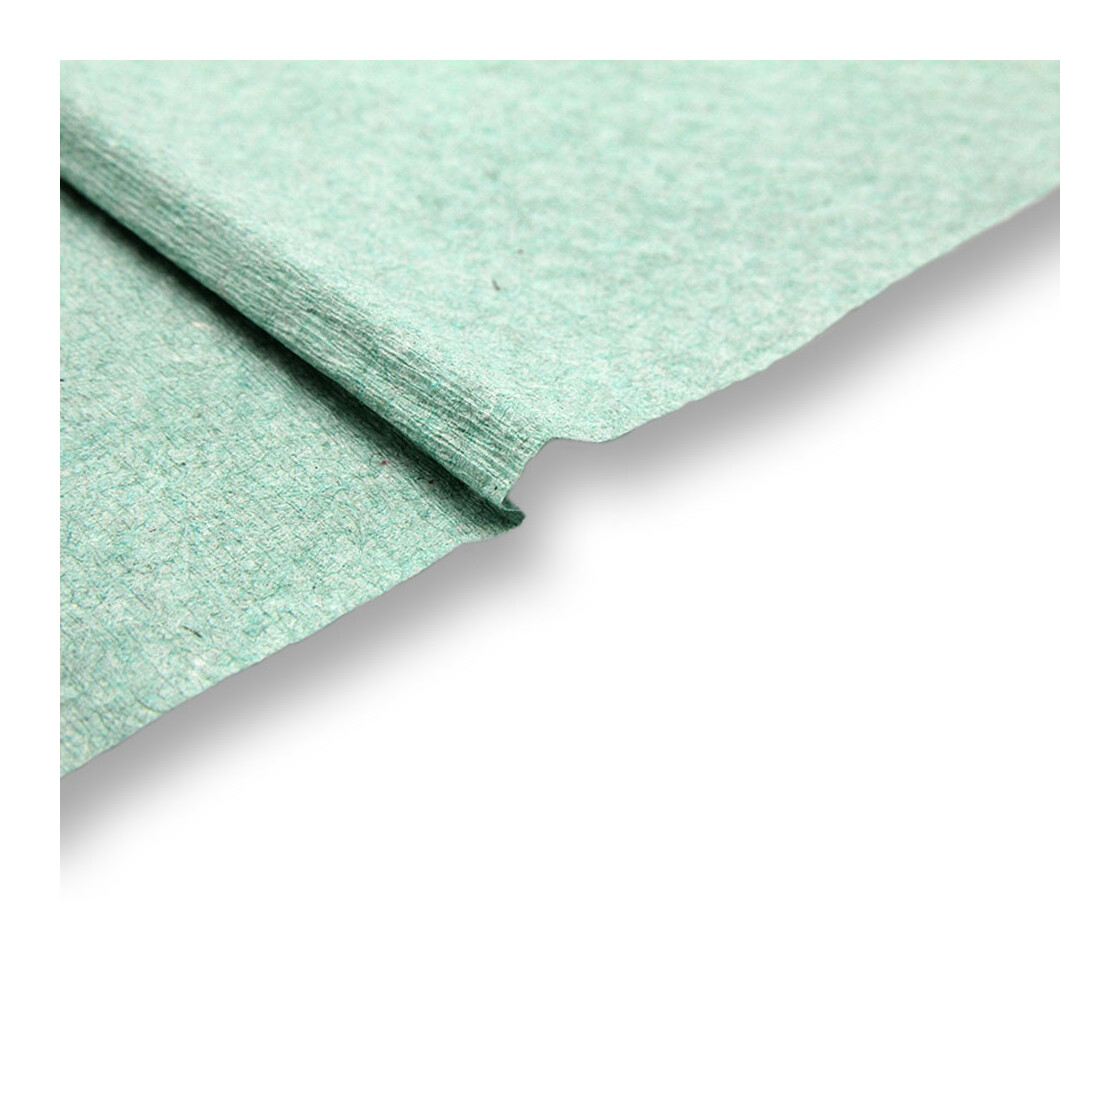 Paper Towels Towel Paper Folding Hand Towels White Green Grey V Fold 25x23 cm 